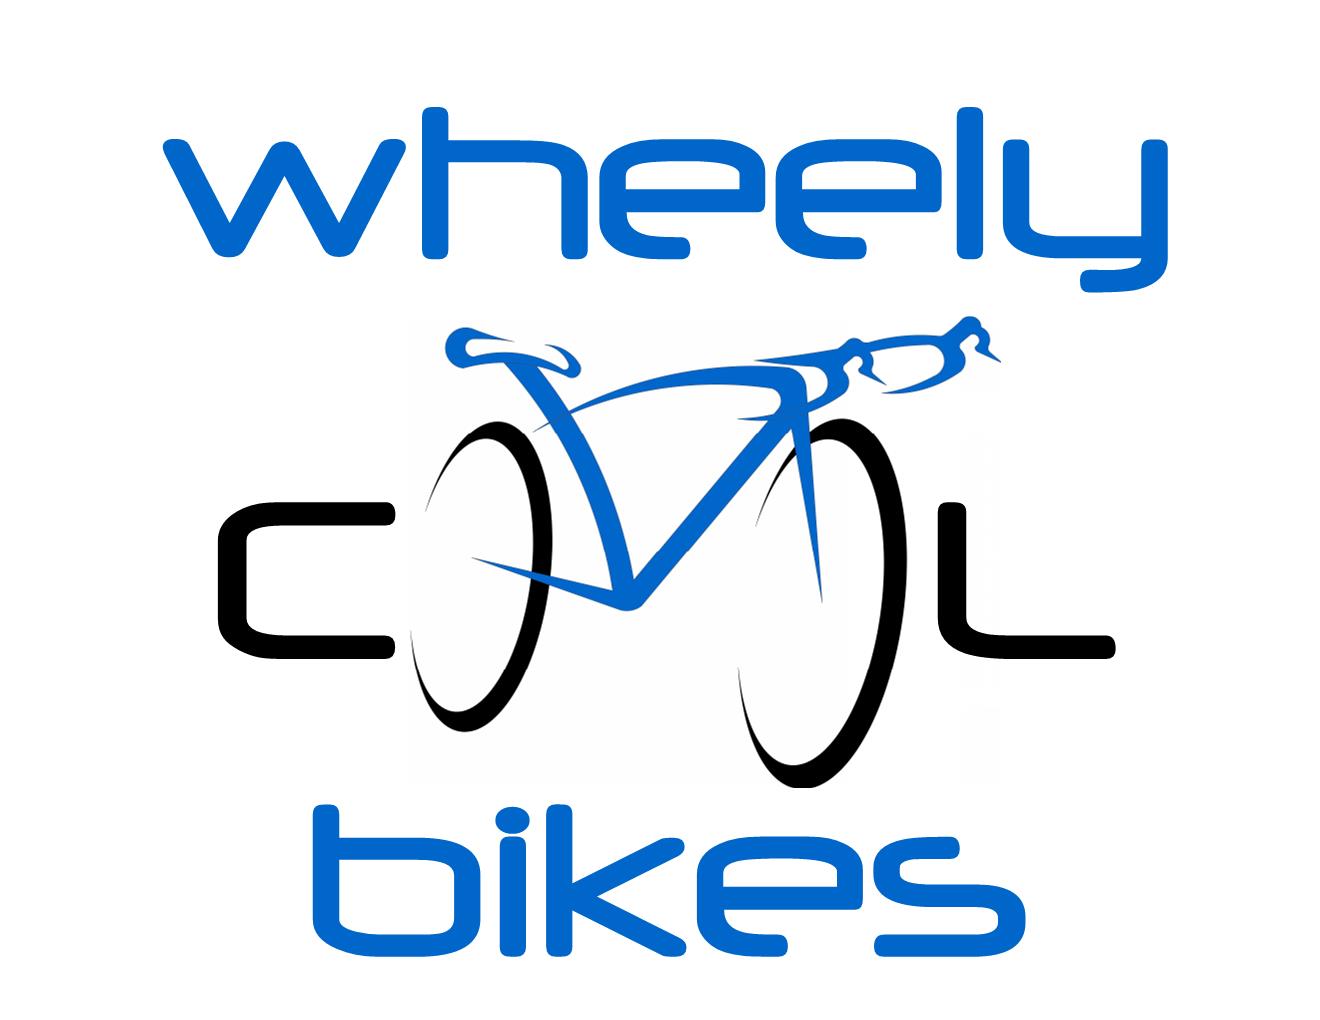 Wheely Cool Bikes